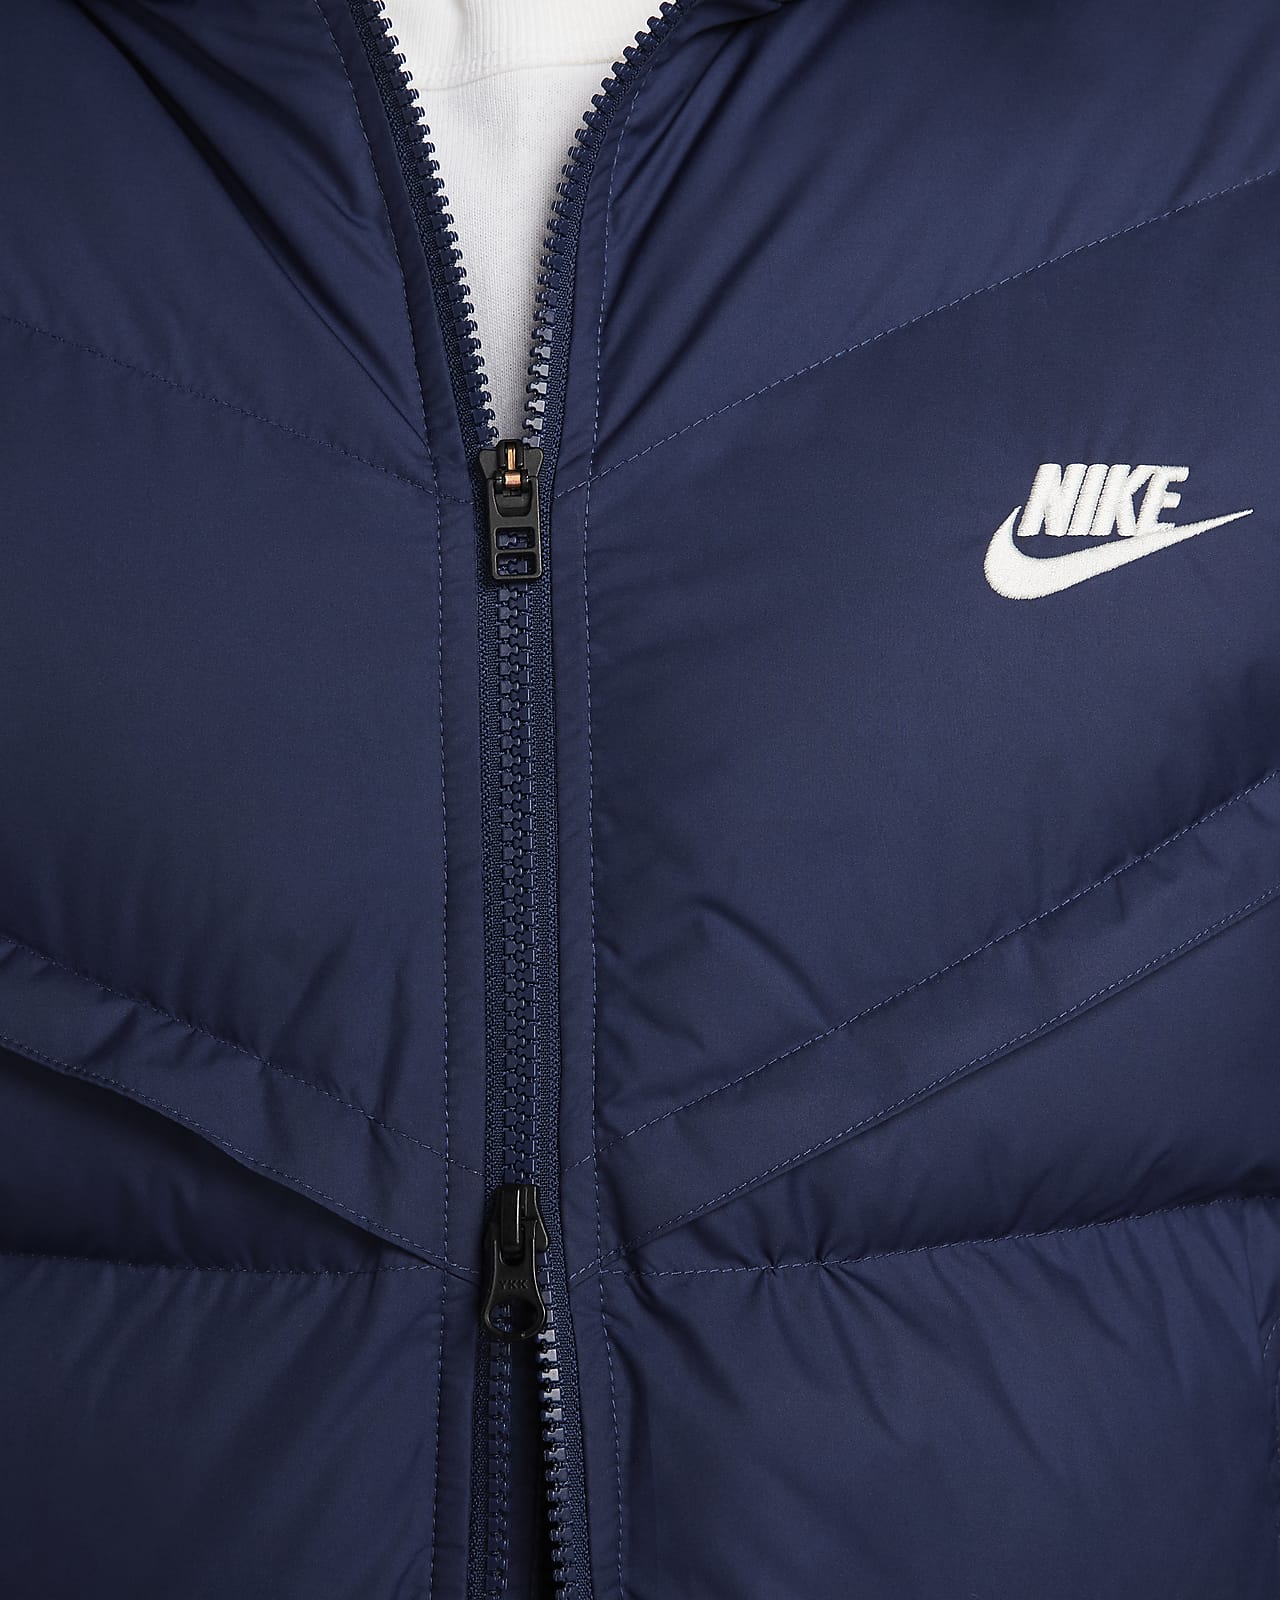 Nike Jacket Men Large Peach Pinkish Quarter Zip Mock Neck Athletic Pullover  Top | Nike jacket, Mens jackets, Quarter zip